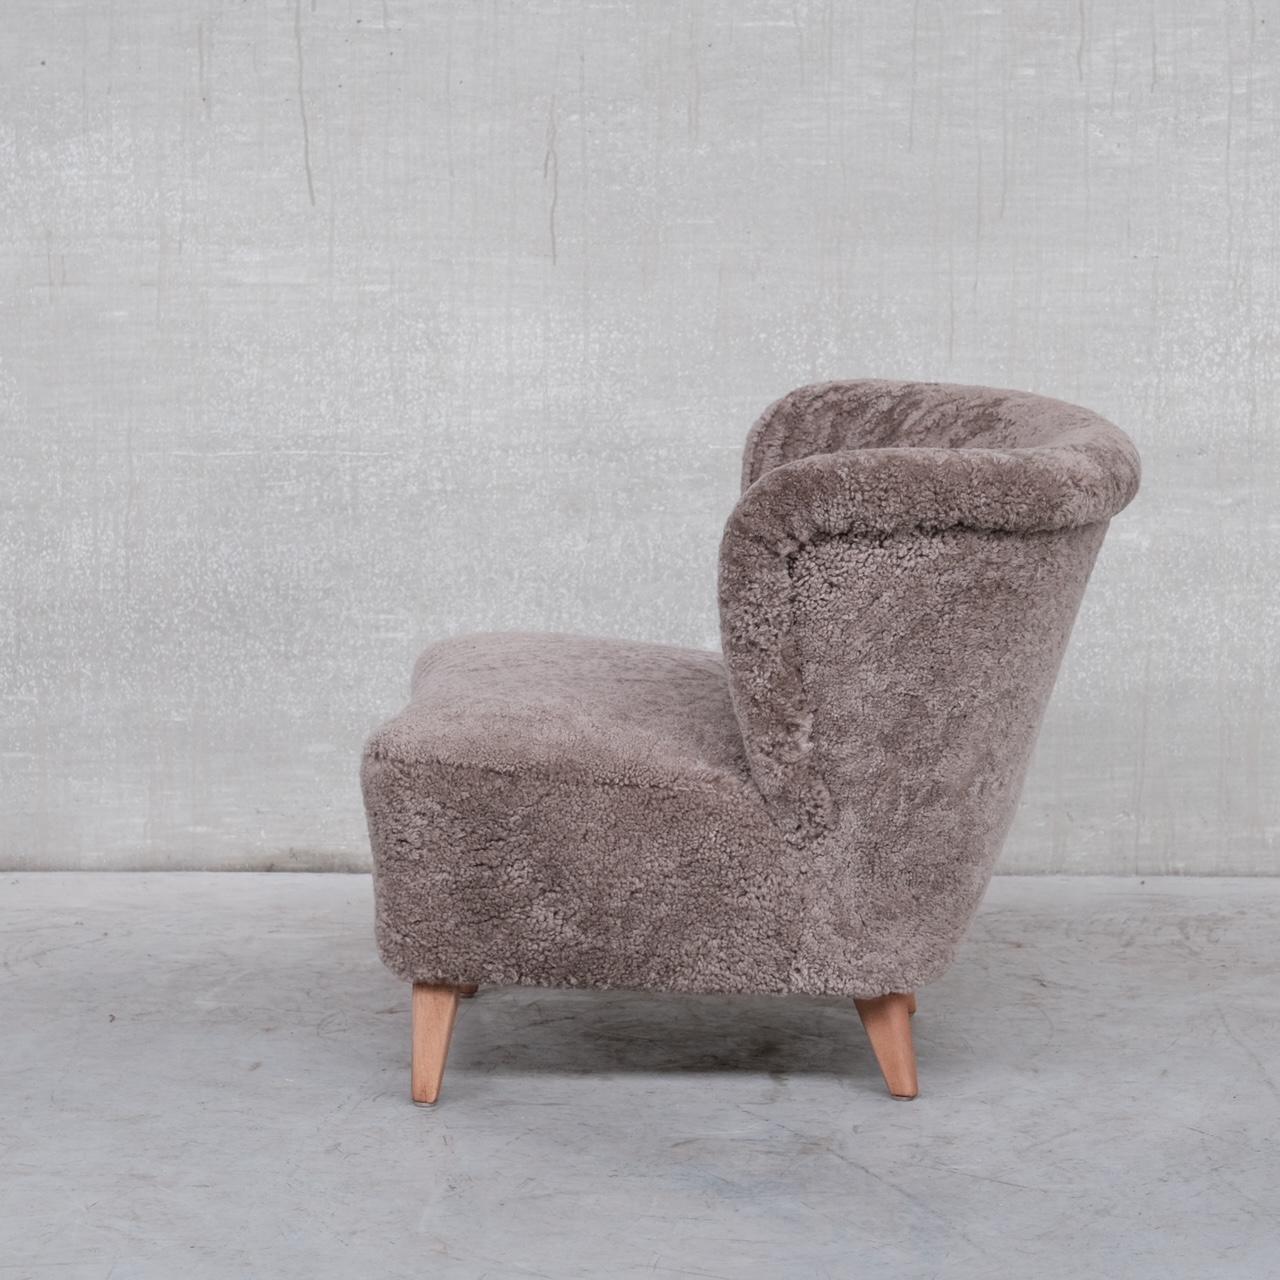 Sheepskin Gösta Jonsson Shearling Mid-Century Swedish Lounge Chair